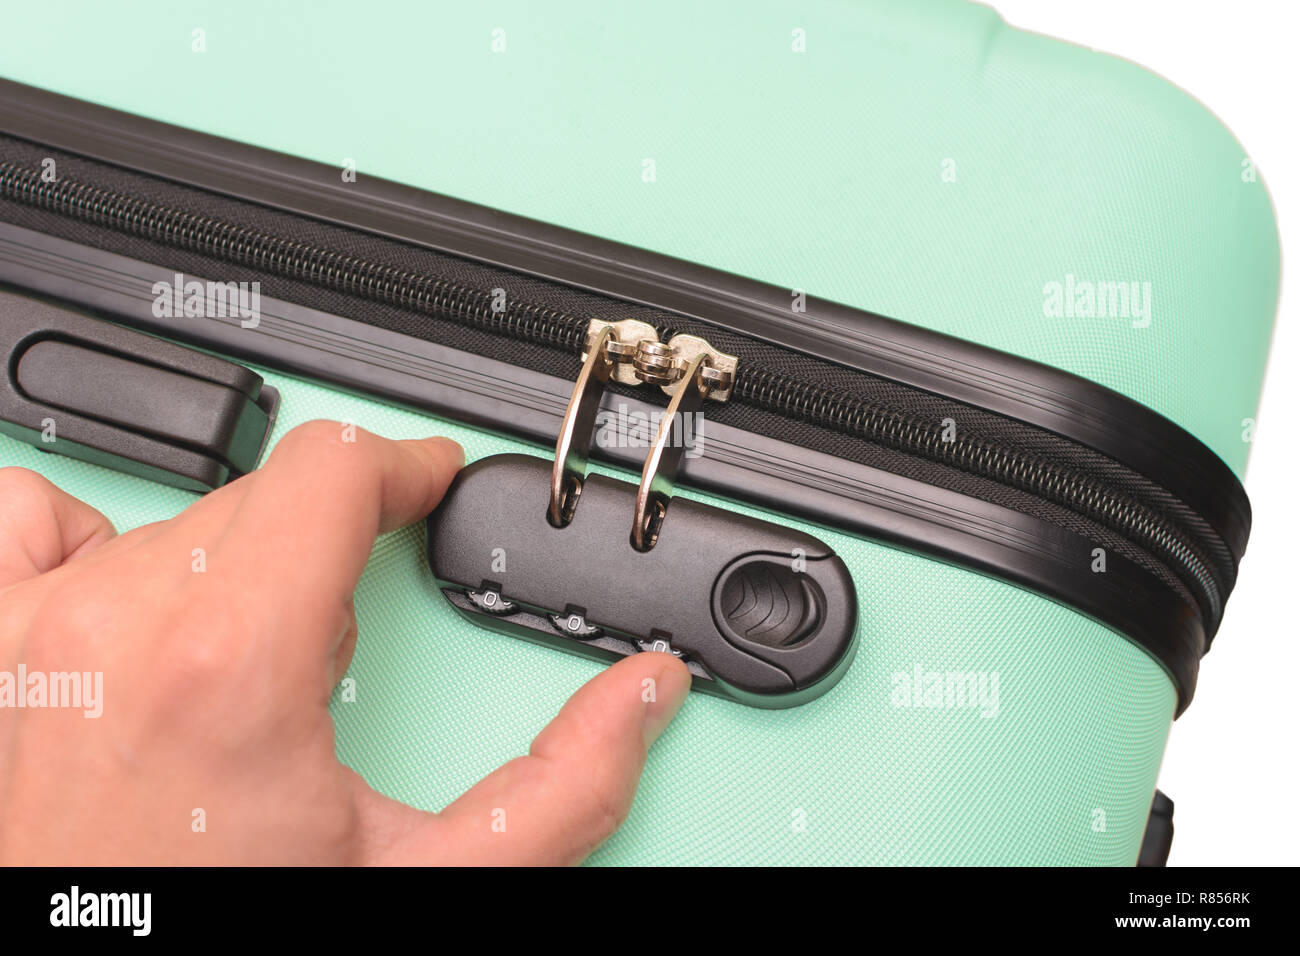 Luggage Zipper Lock